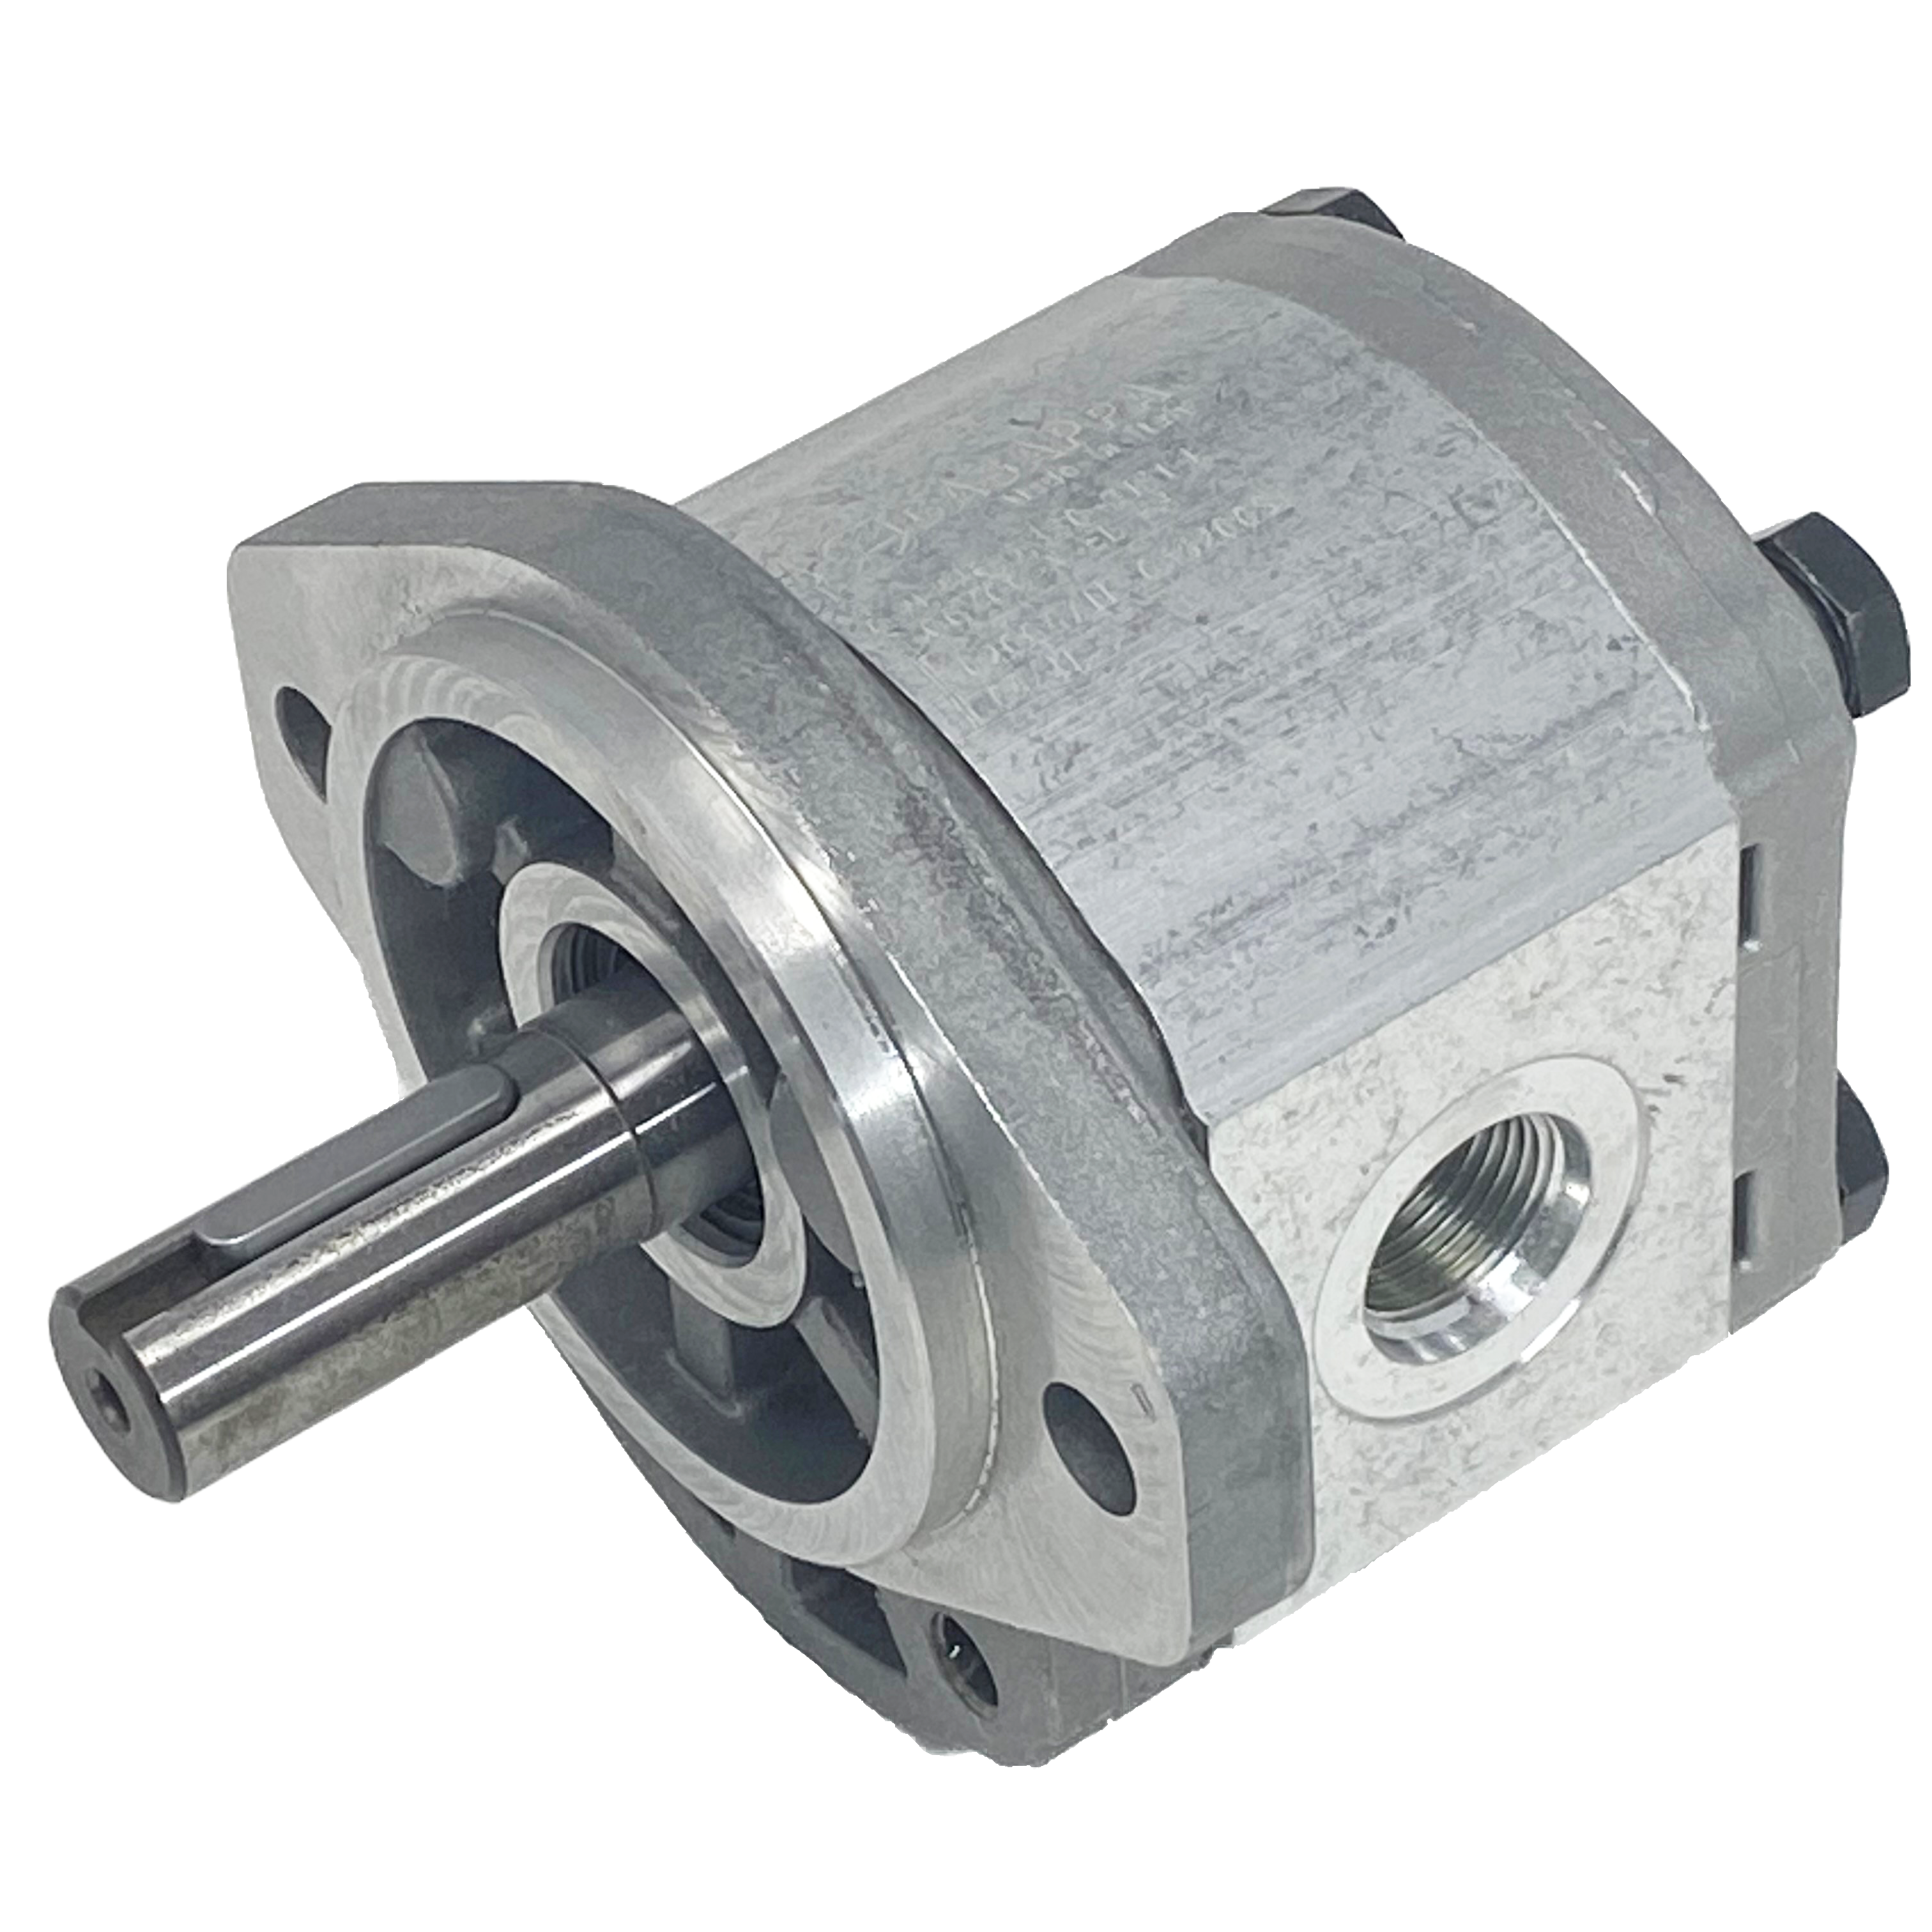 PLM20.6,3R0-49S1-LOC/OC-N-EL : Casappa Polaris Gear Motor, 6.61cc, 3625psi Rated, 4000RPM, Reversible Rear External Drain, 3/4" Bore x 3/16" Key Shaft, SAE A 2-Bolt Flange, 0.625 (5/8") #10 SAE Inlet, 0.625 (5/8") #10 SAE Outlet, Aluminum Body & Flange